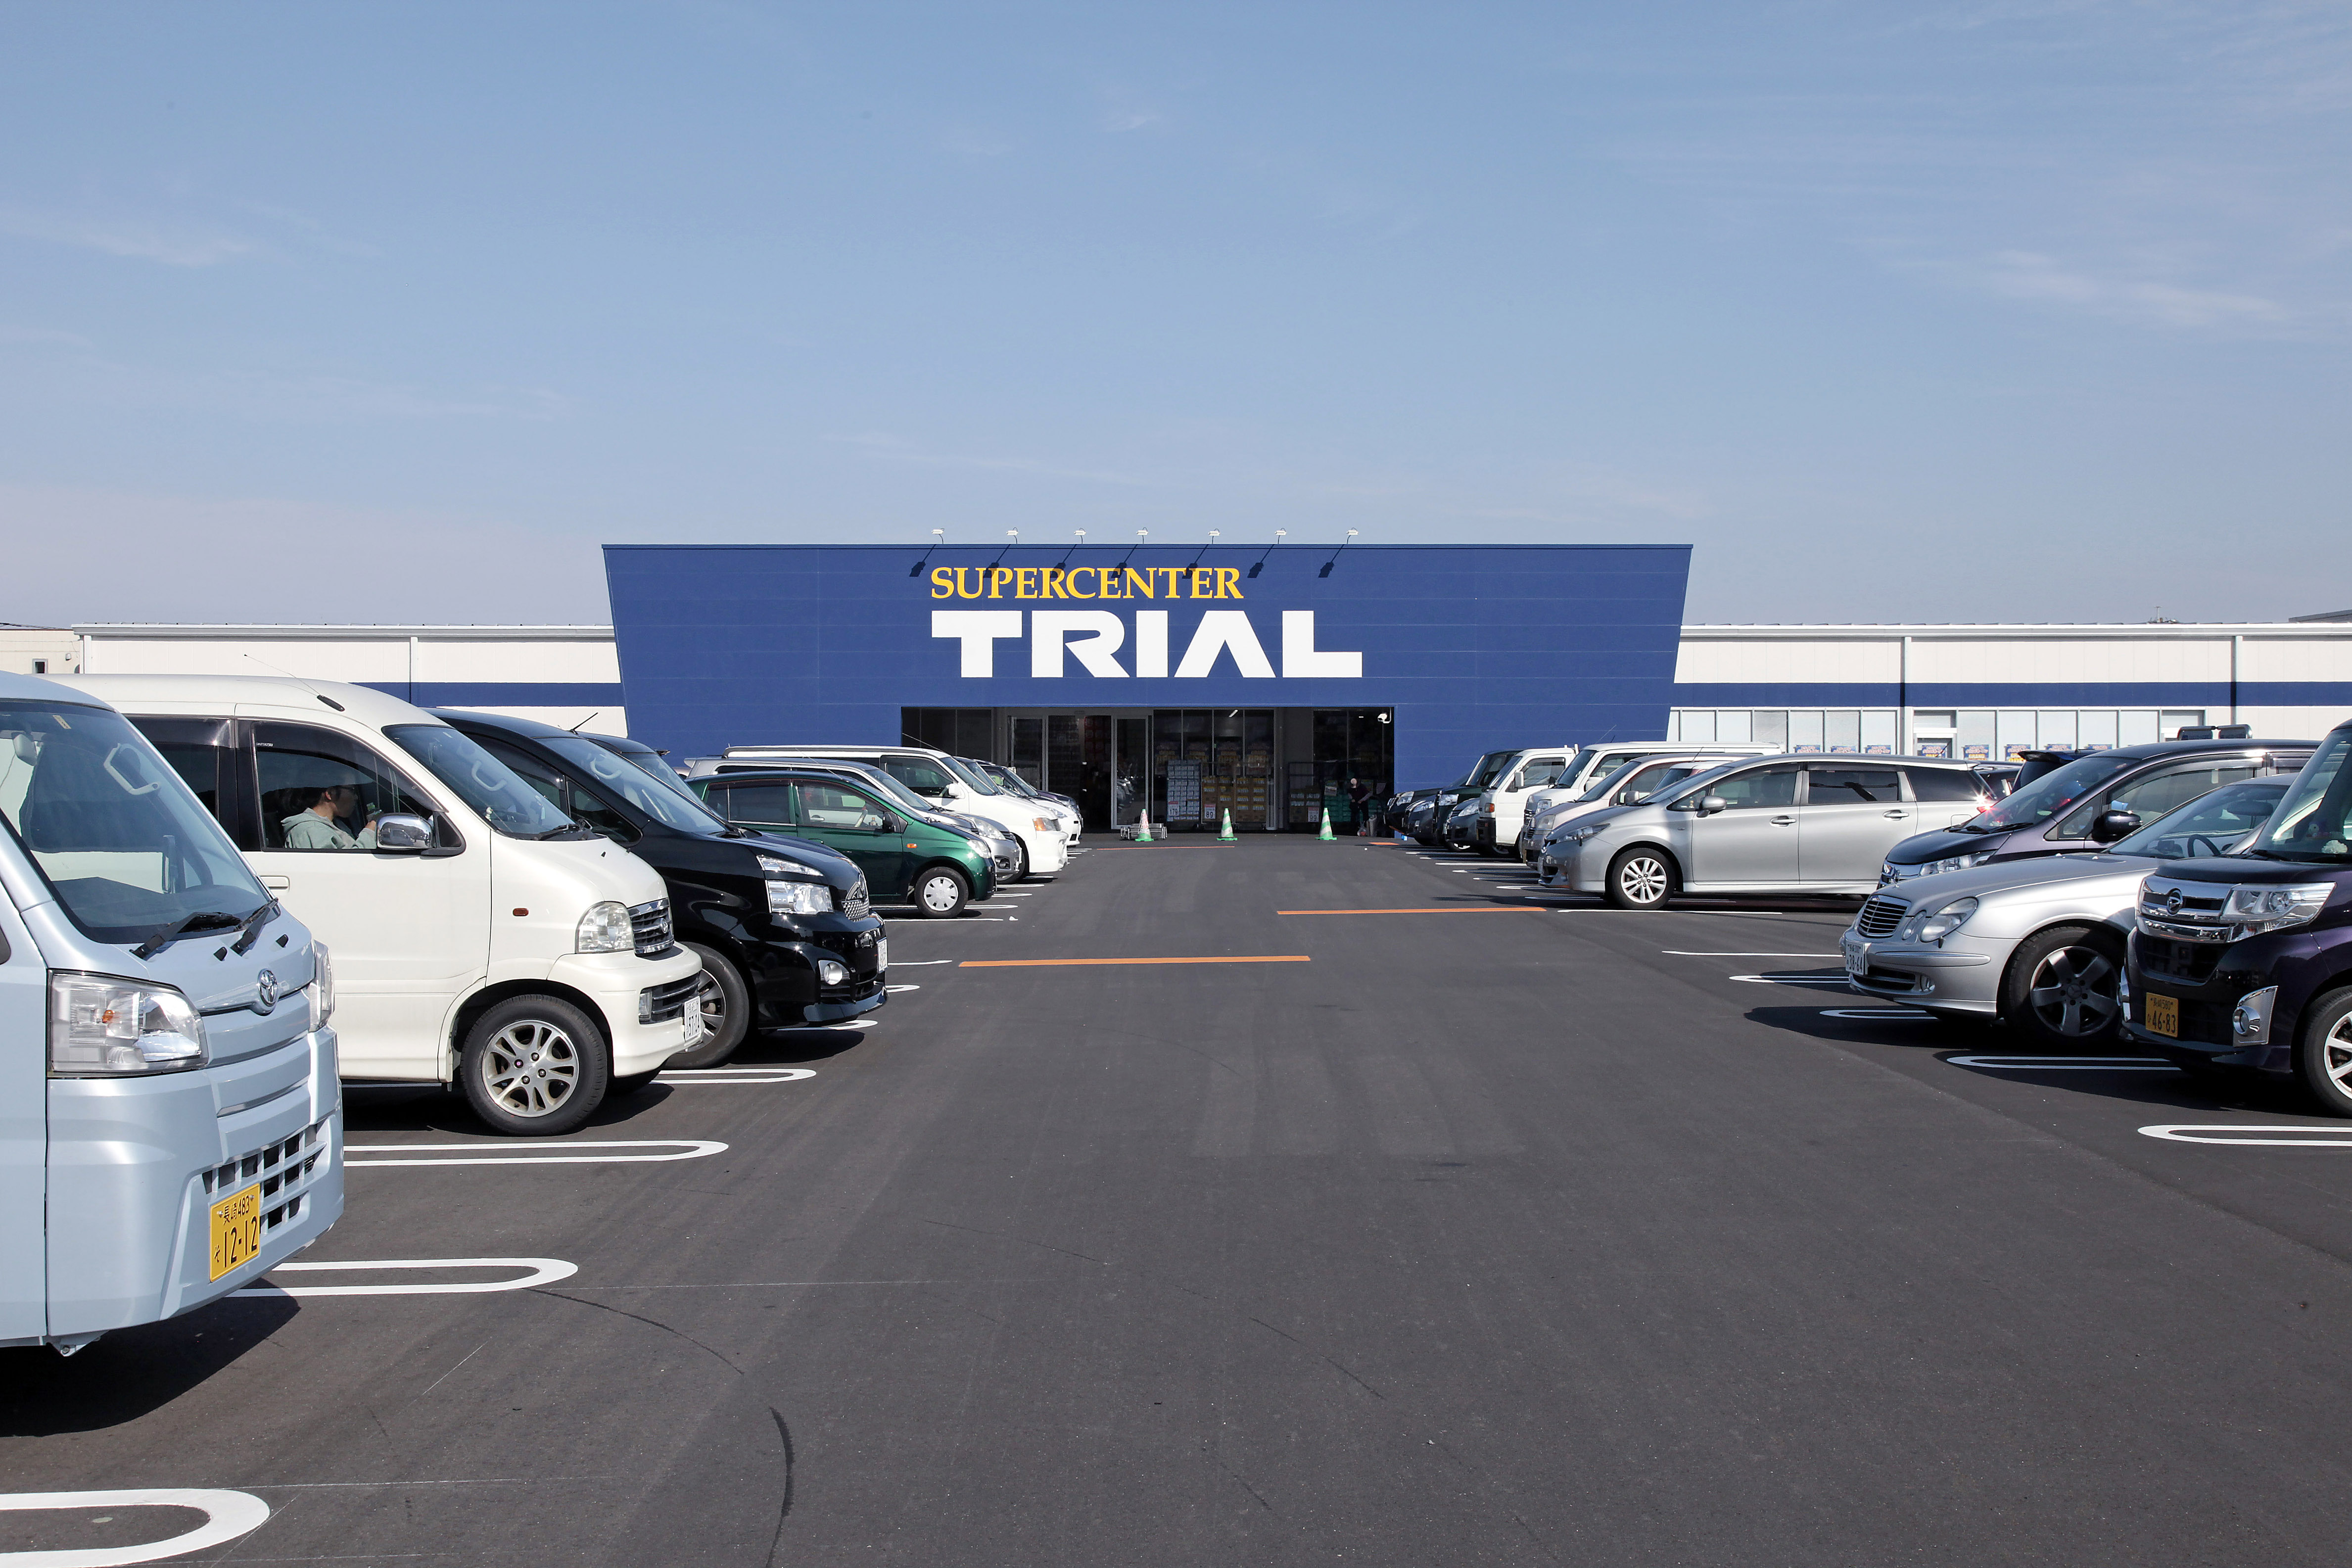 Supercenter TRIAL Togitsu Store (land ownership interests)2